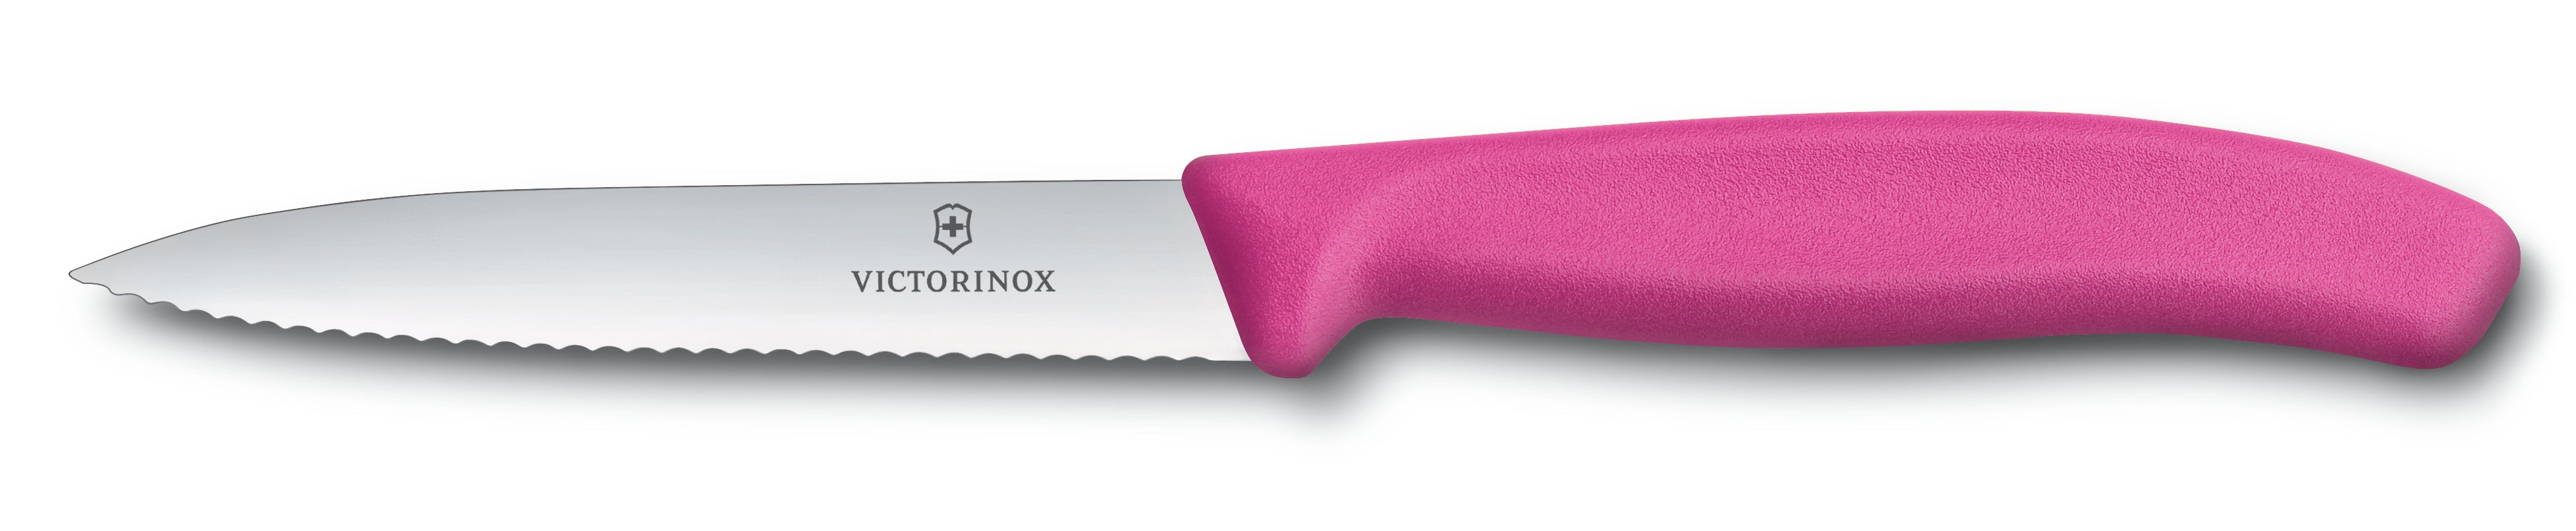 Victorinox Classic Paring Knife Wavy Edge 10cm - Pink